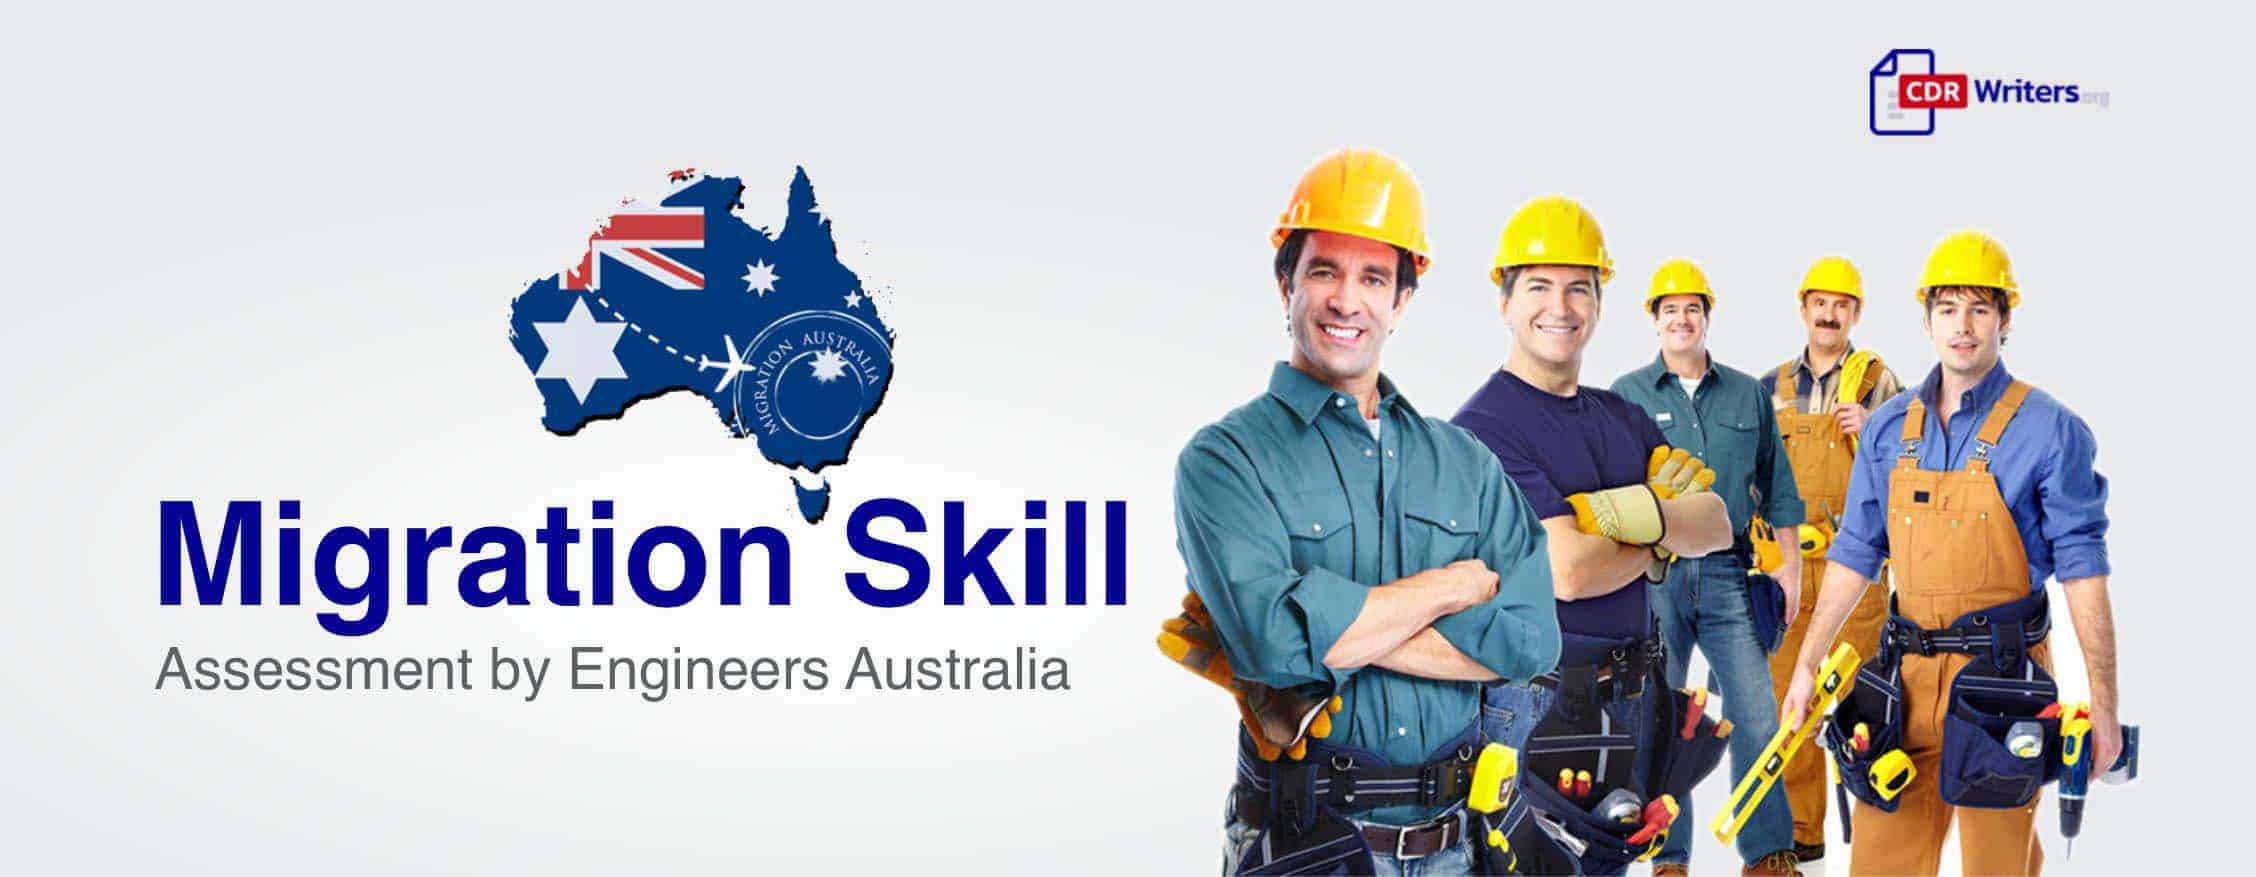 engineers Australia migration skill assessment